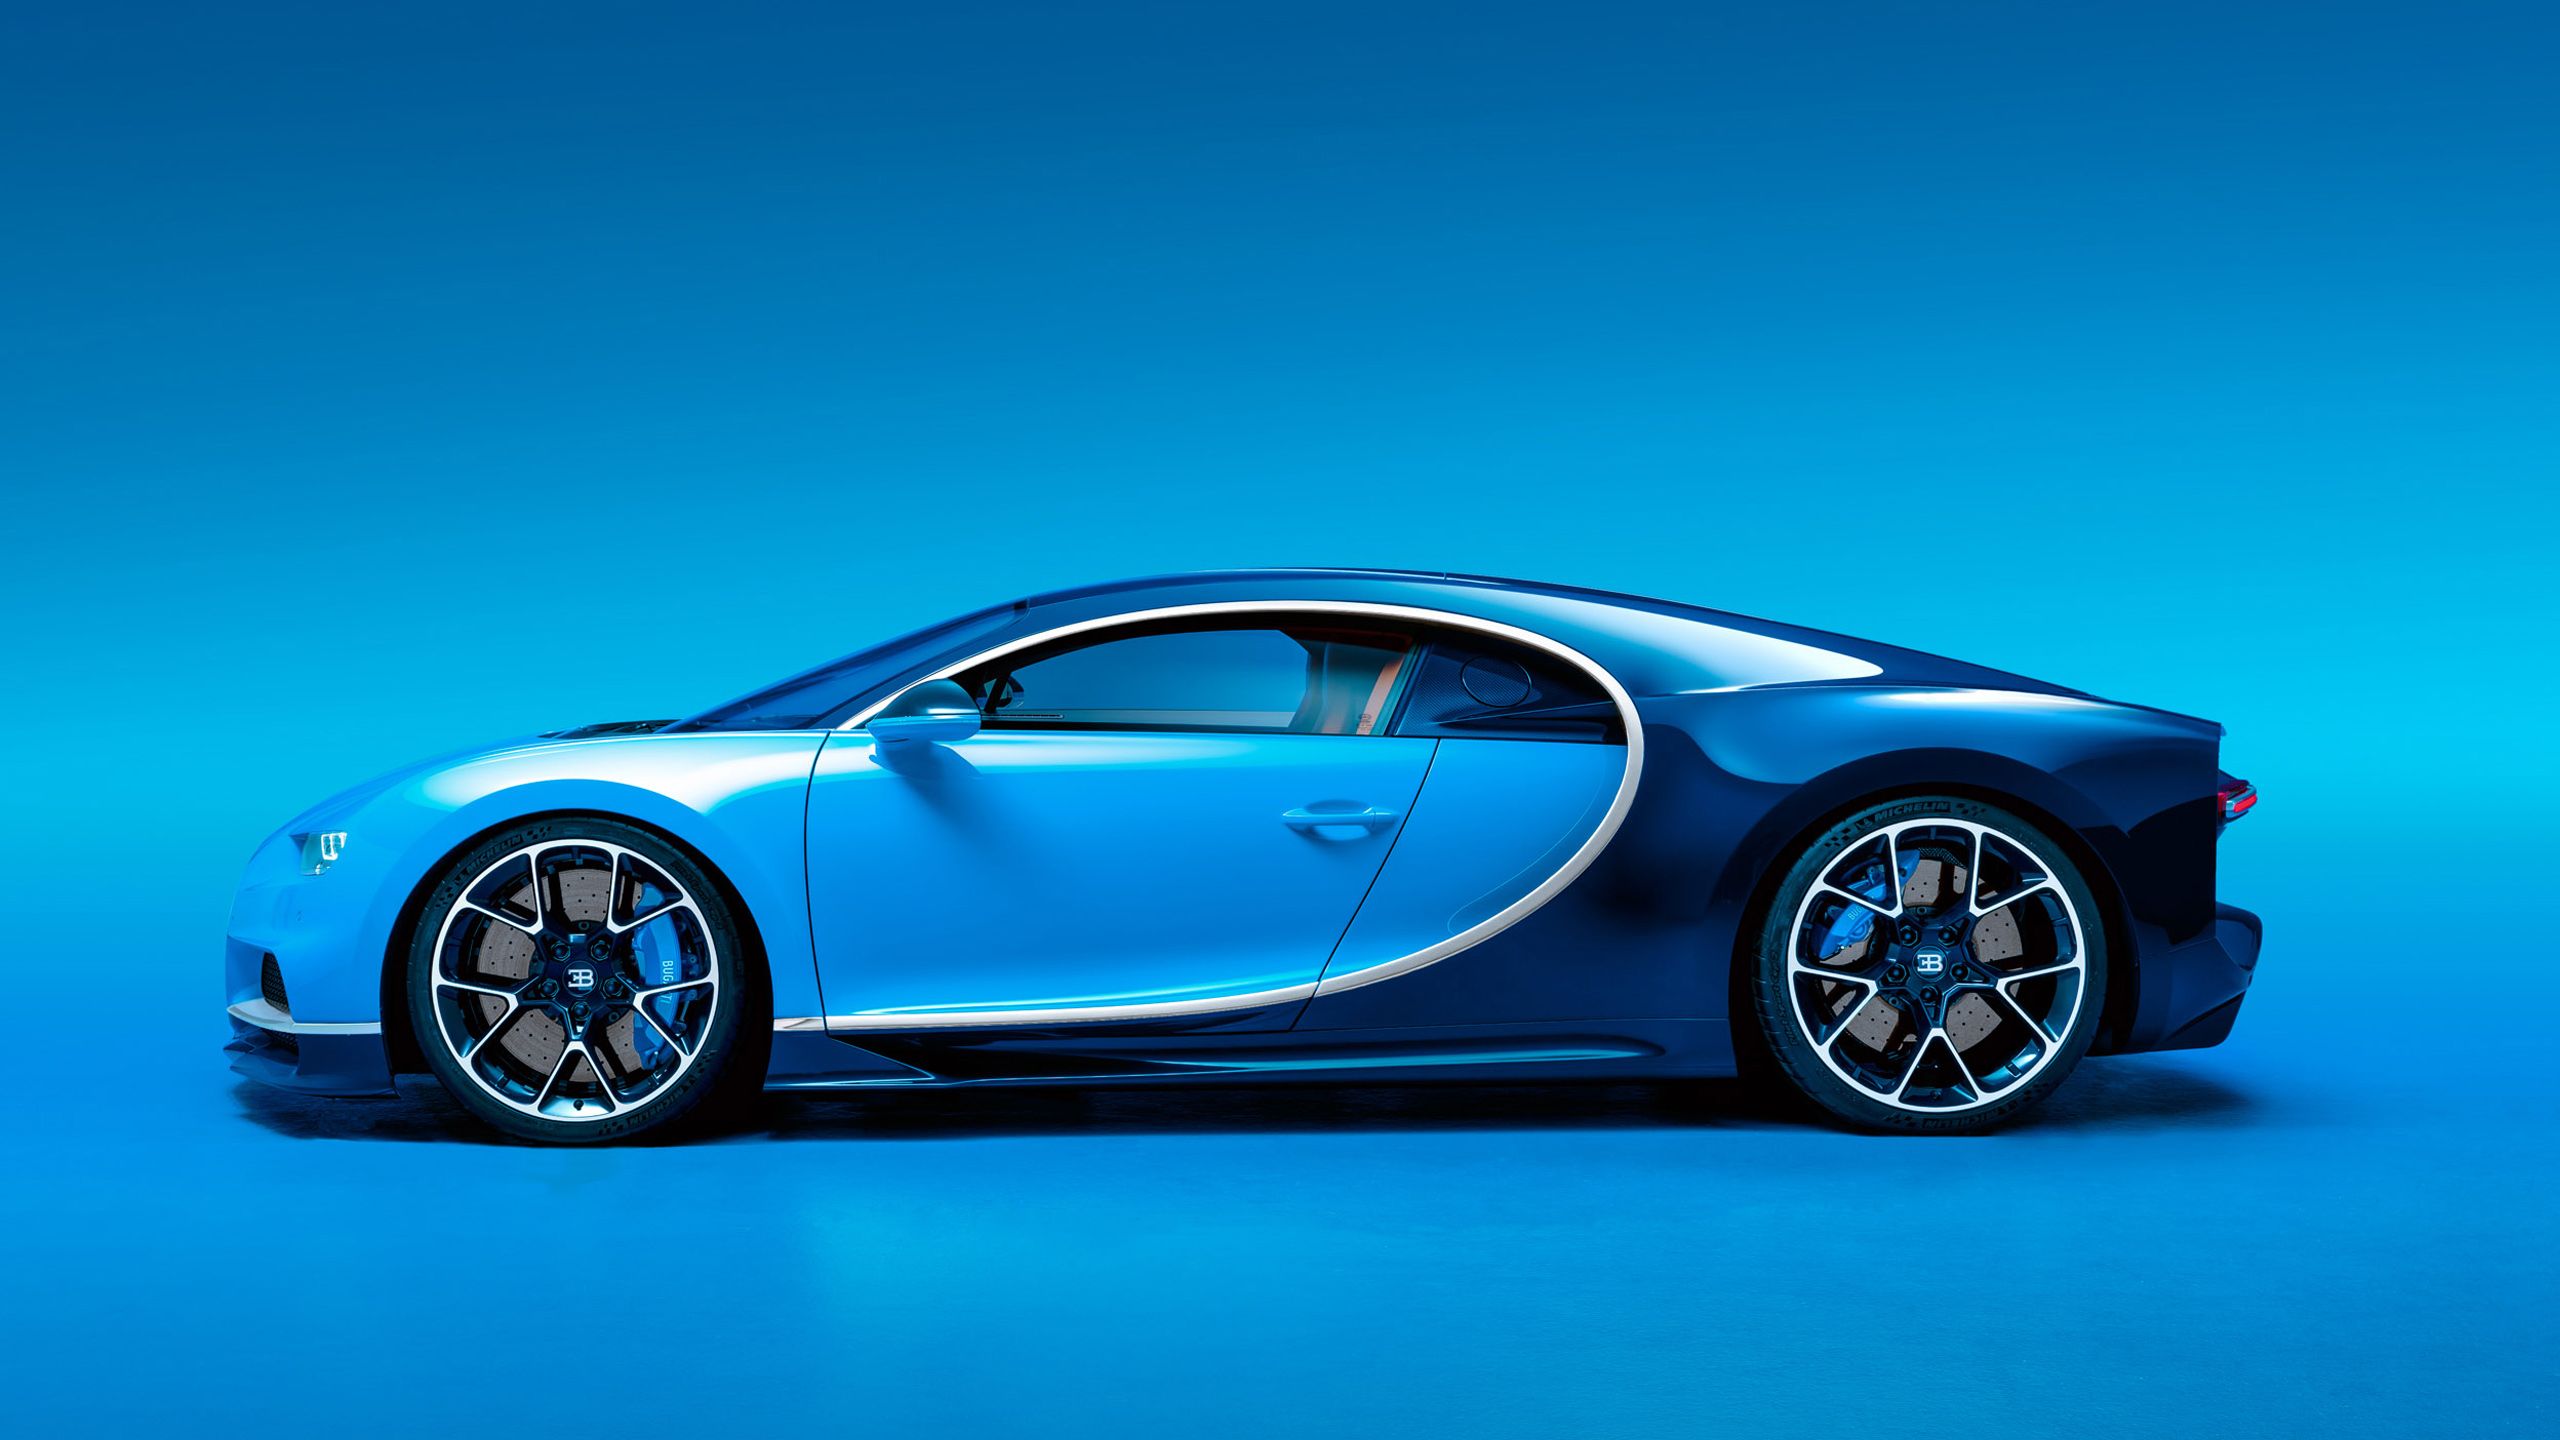 Light Blue Bugatti Wallpapers